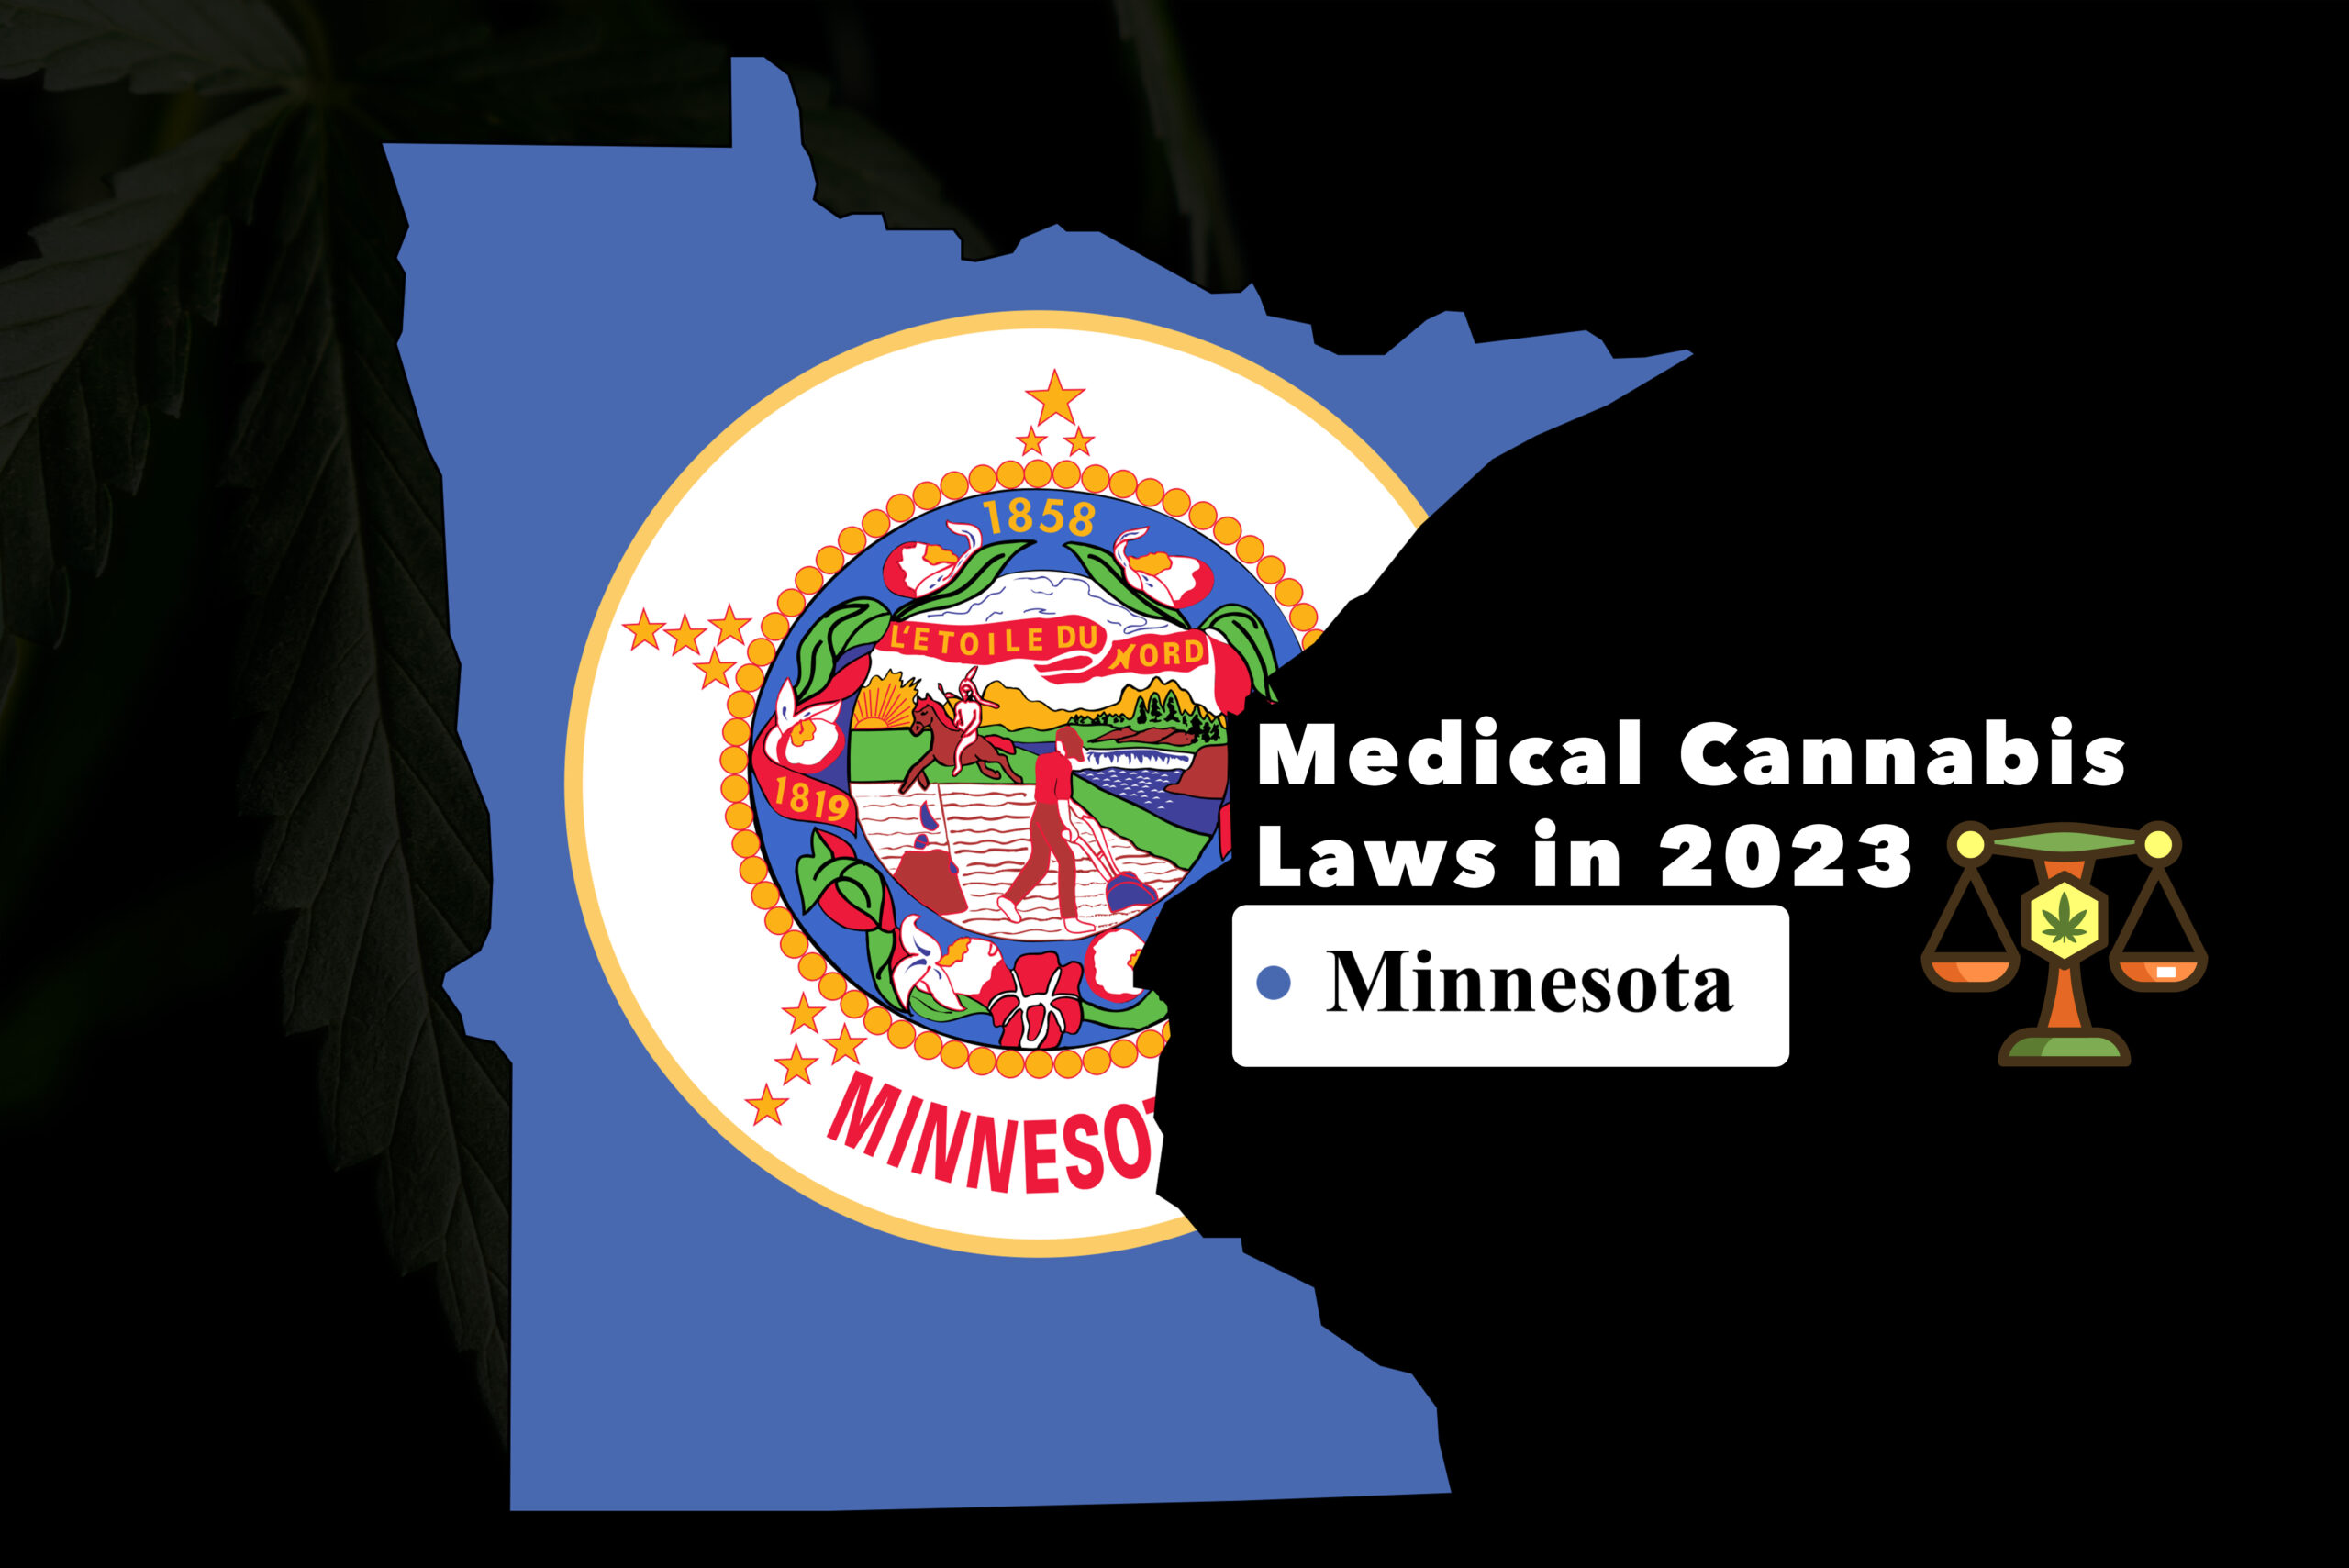 Minnesota Medical Cannabis Laws